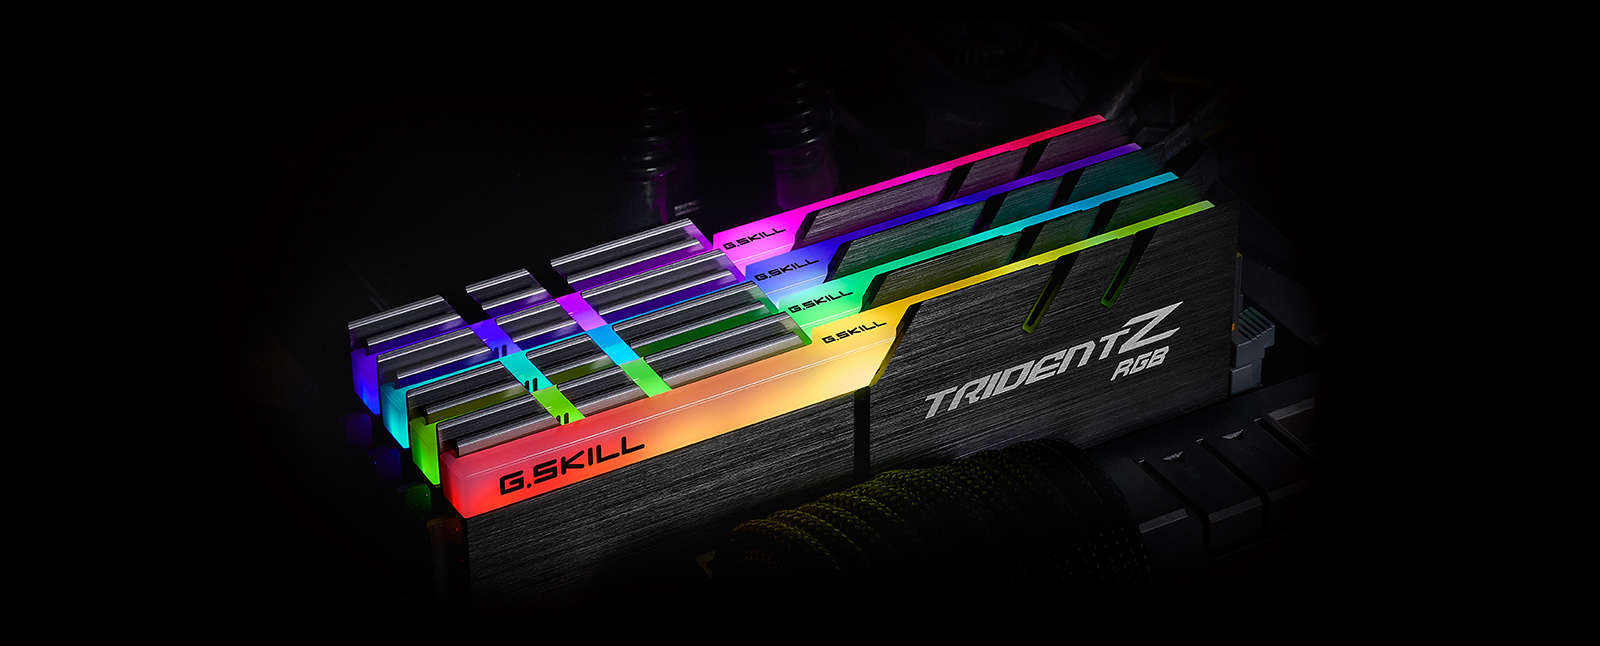 G.Skill Trident Z RGB 16GB DDR4 3200Mhz Desktop Ram RGB Colours